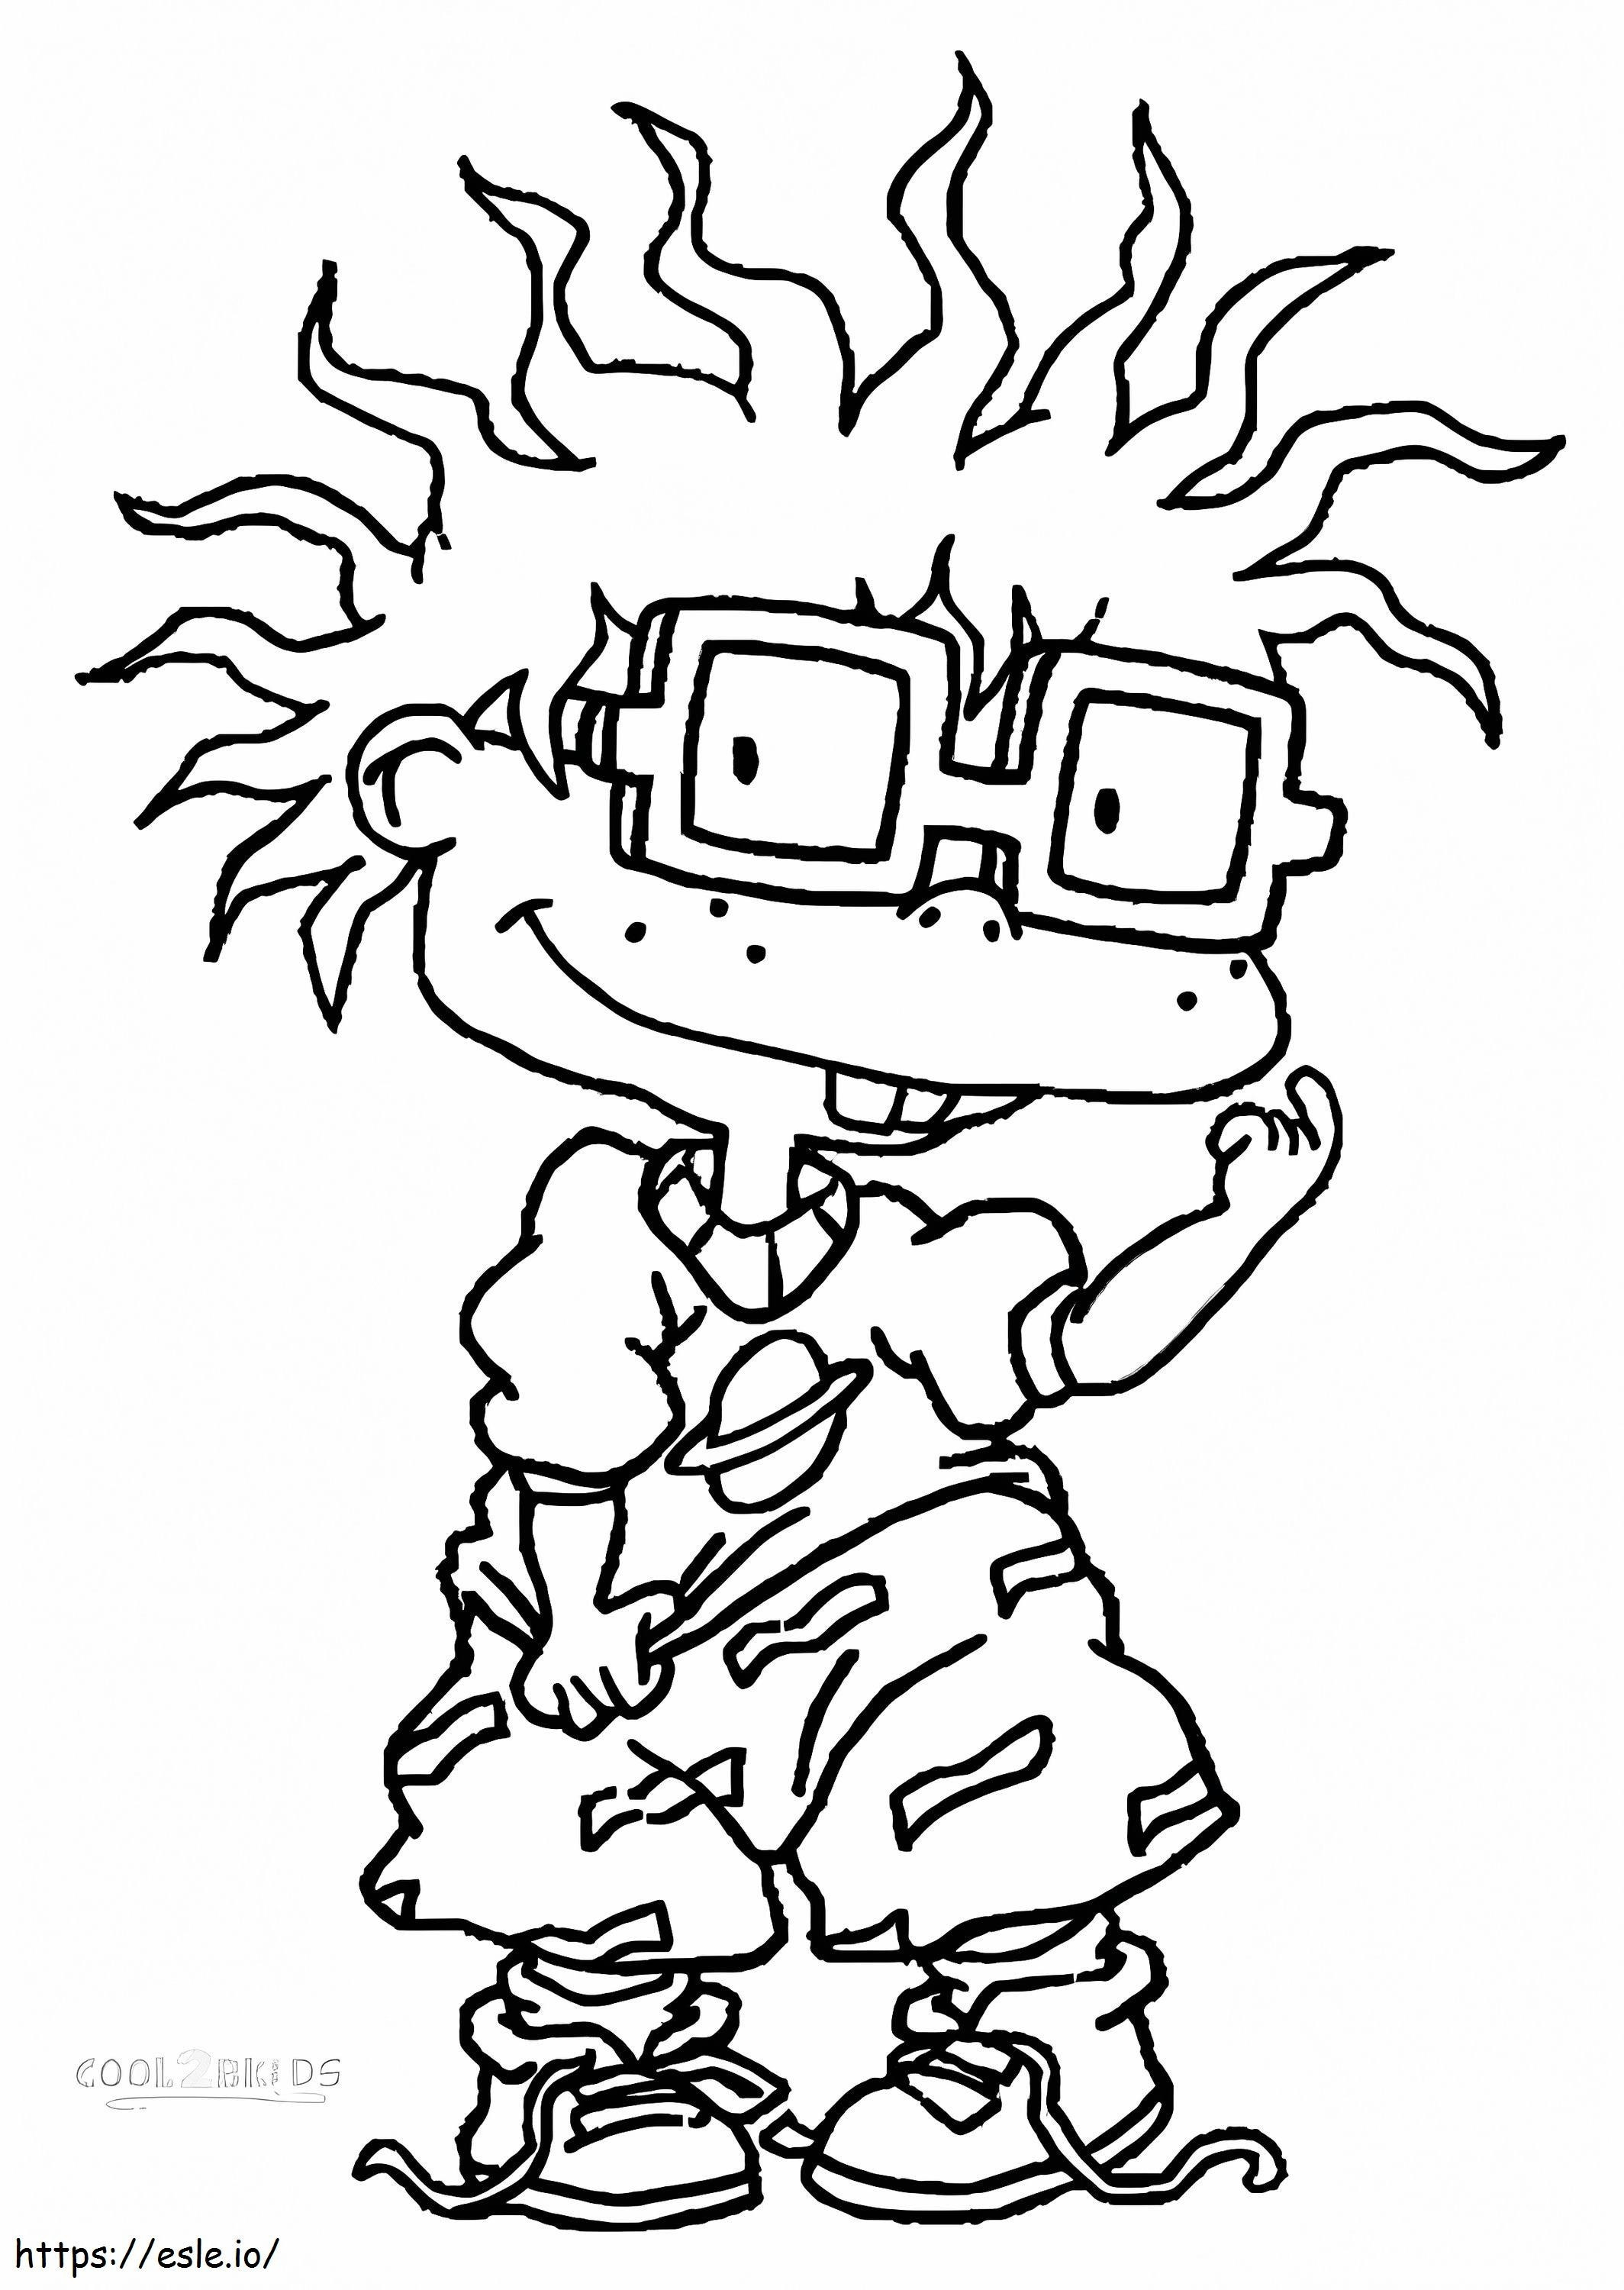 Coloriage Chuckie Finster des Razmoket à imprimer dessin